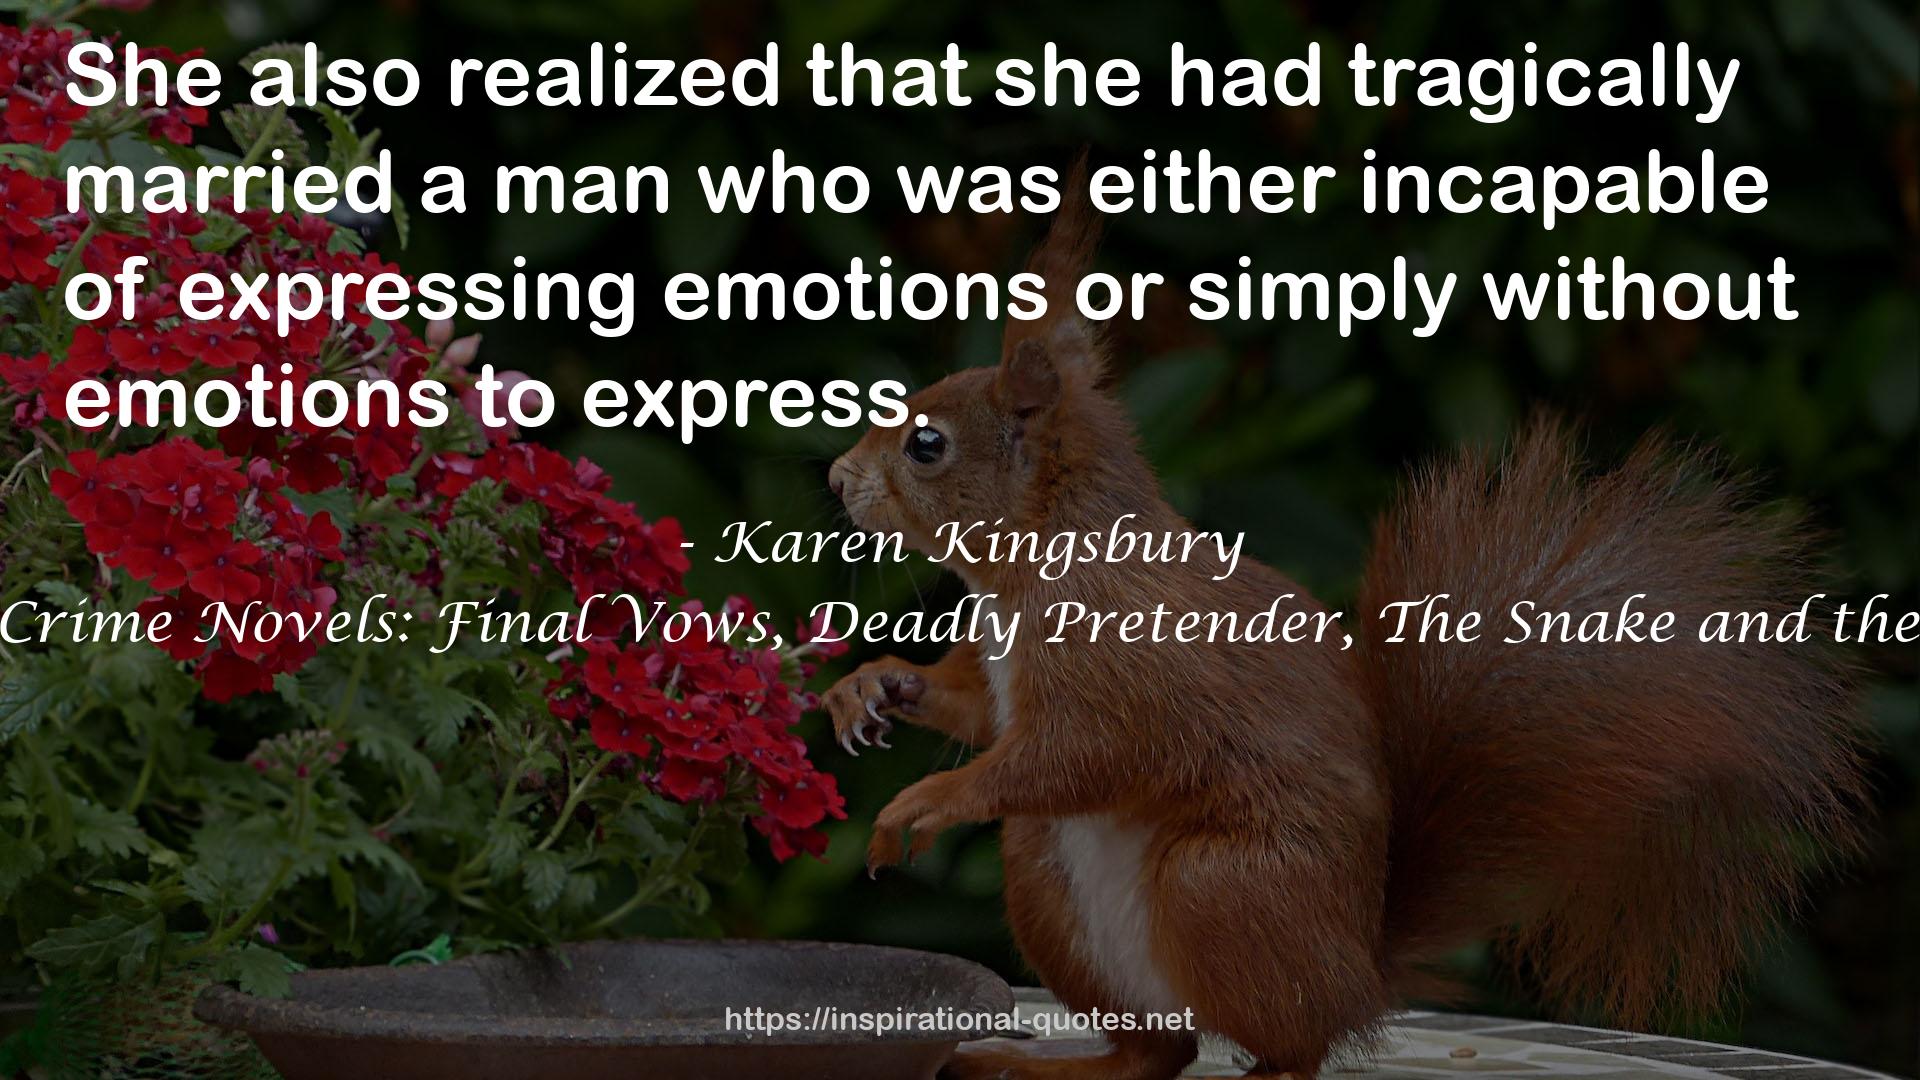 Karen Kingsbury True Crime Novels: Final Vows, Deadly Pretender, The Snake and the Spider, Missy’s Murder QUOTES